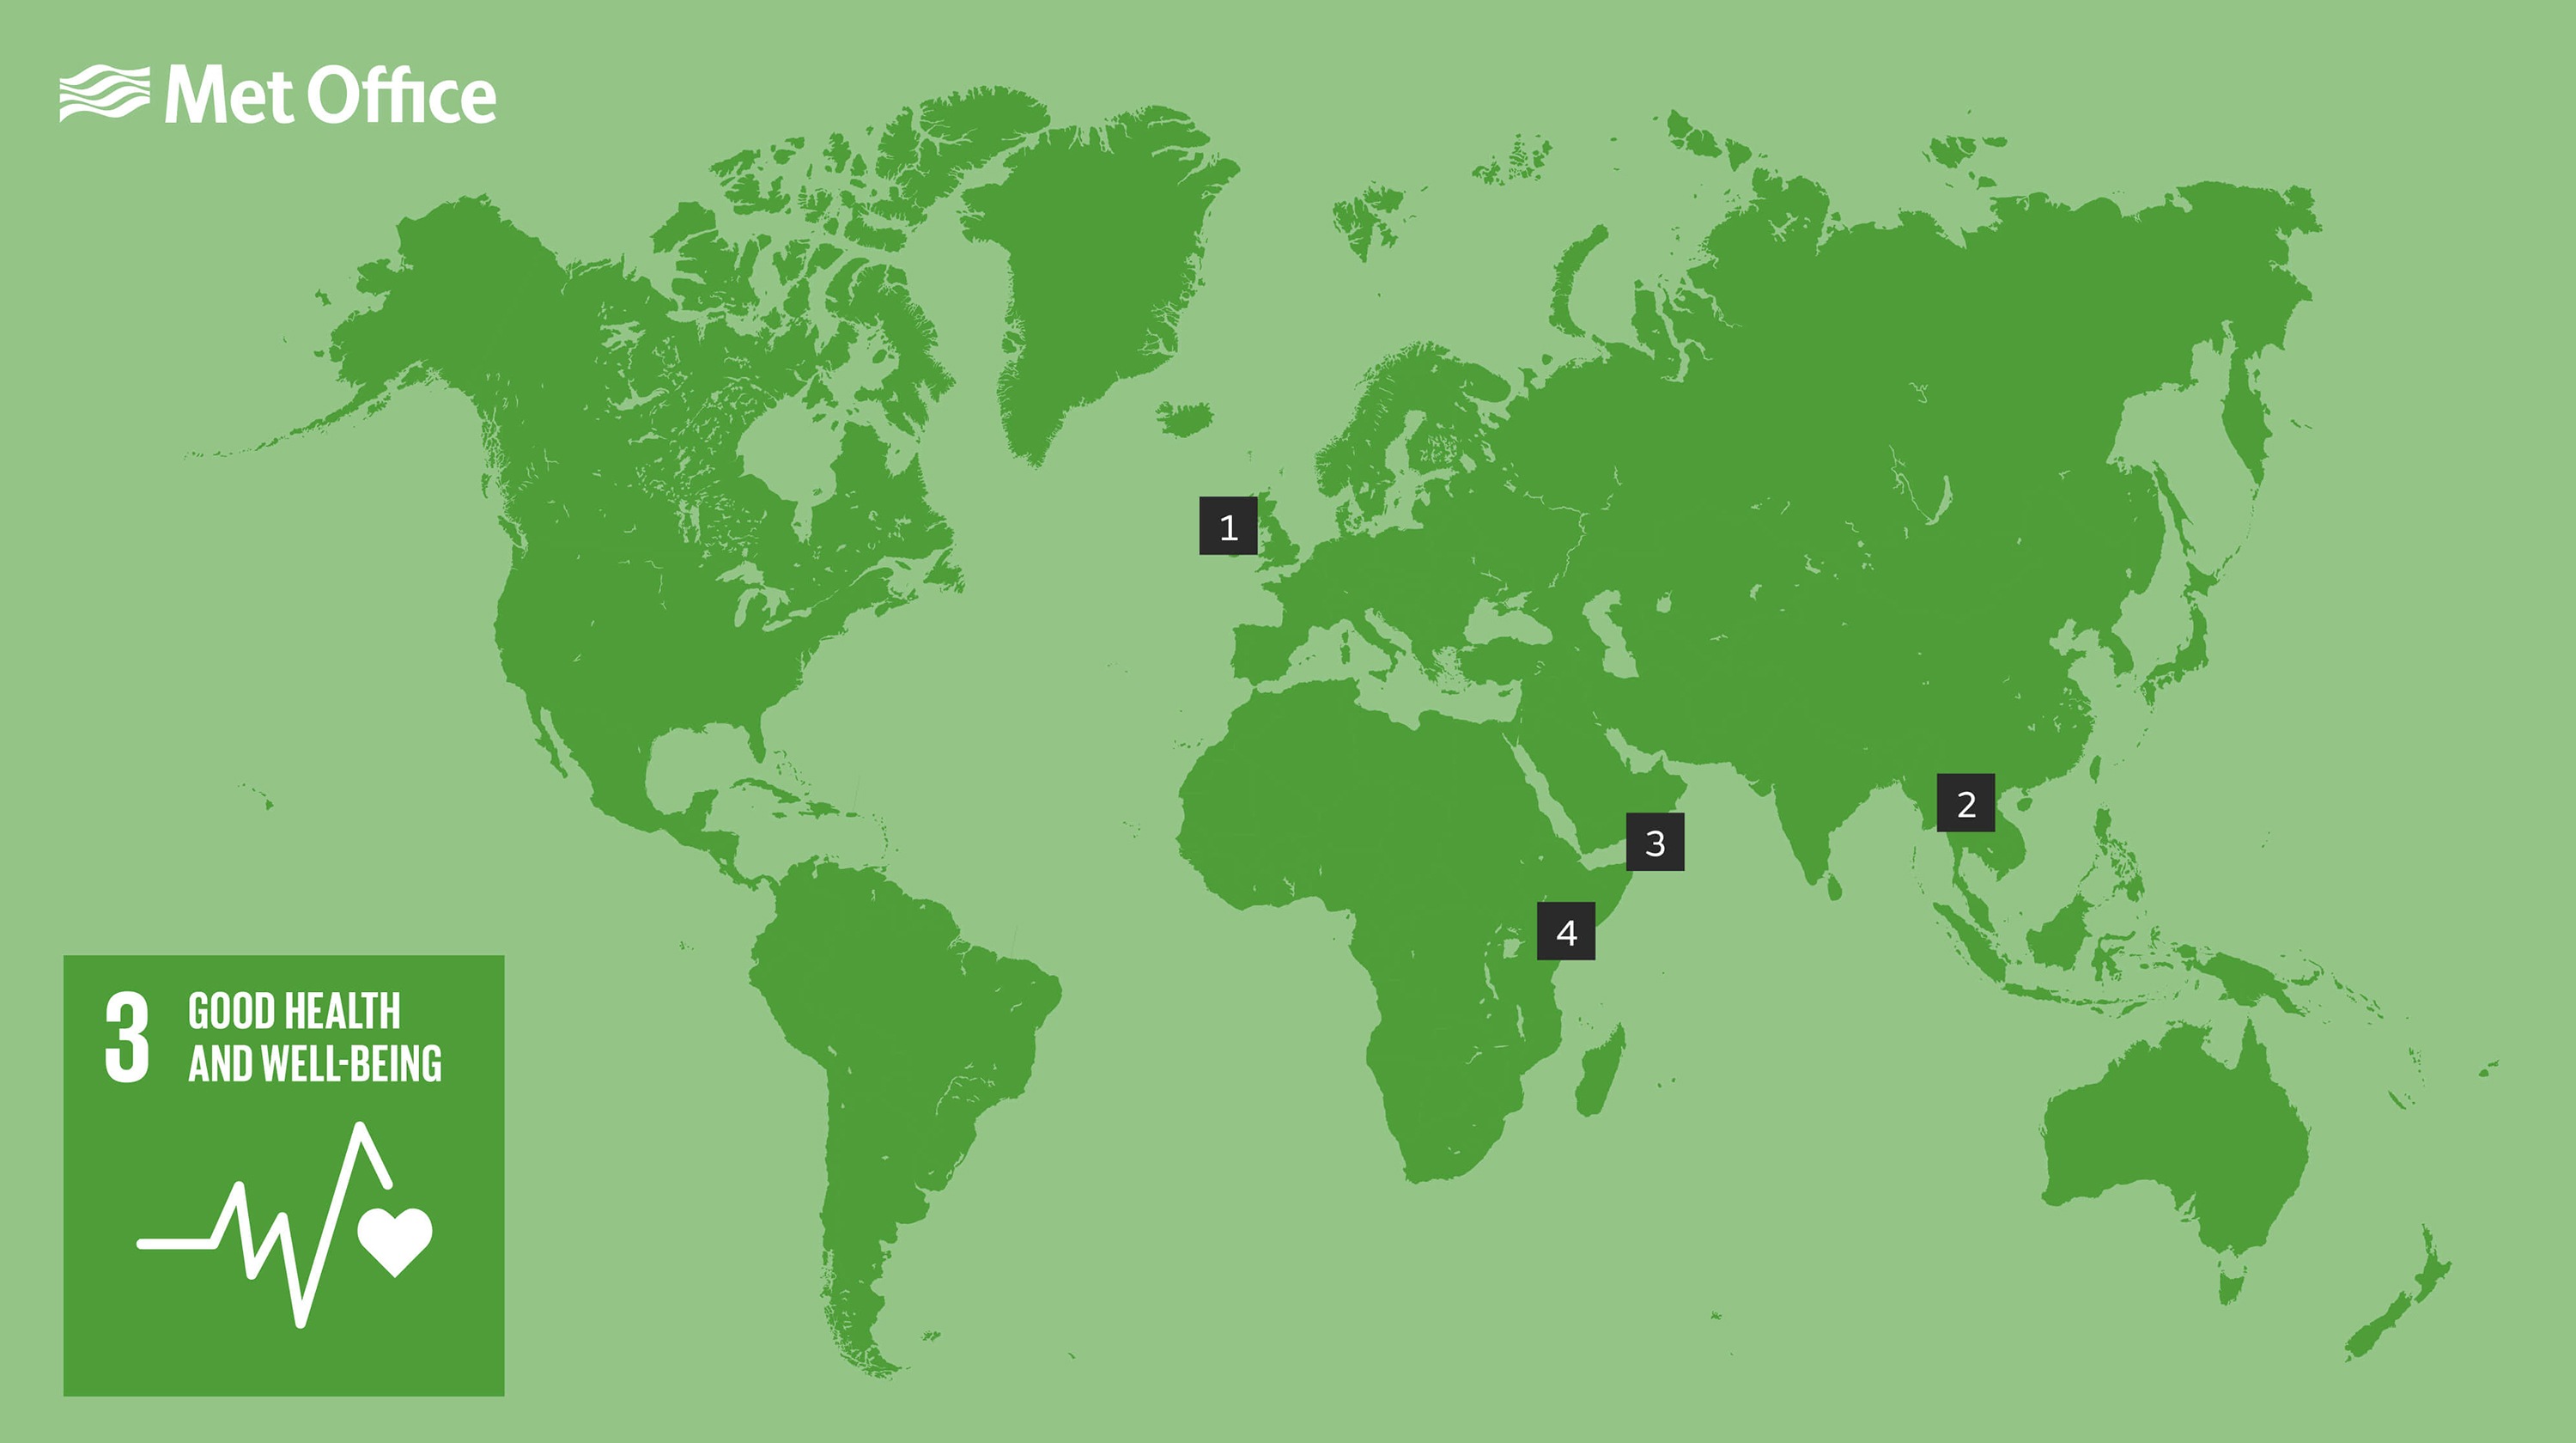 Map showing places relevant to SDG3 goal, as per the descriptions below.